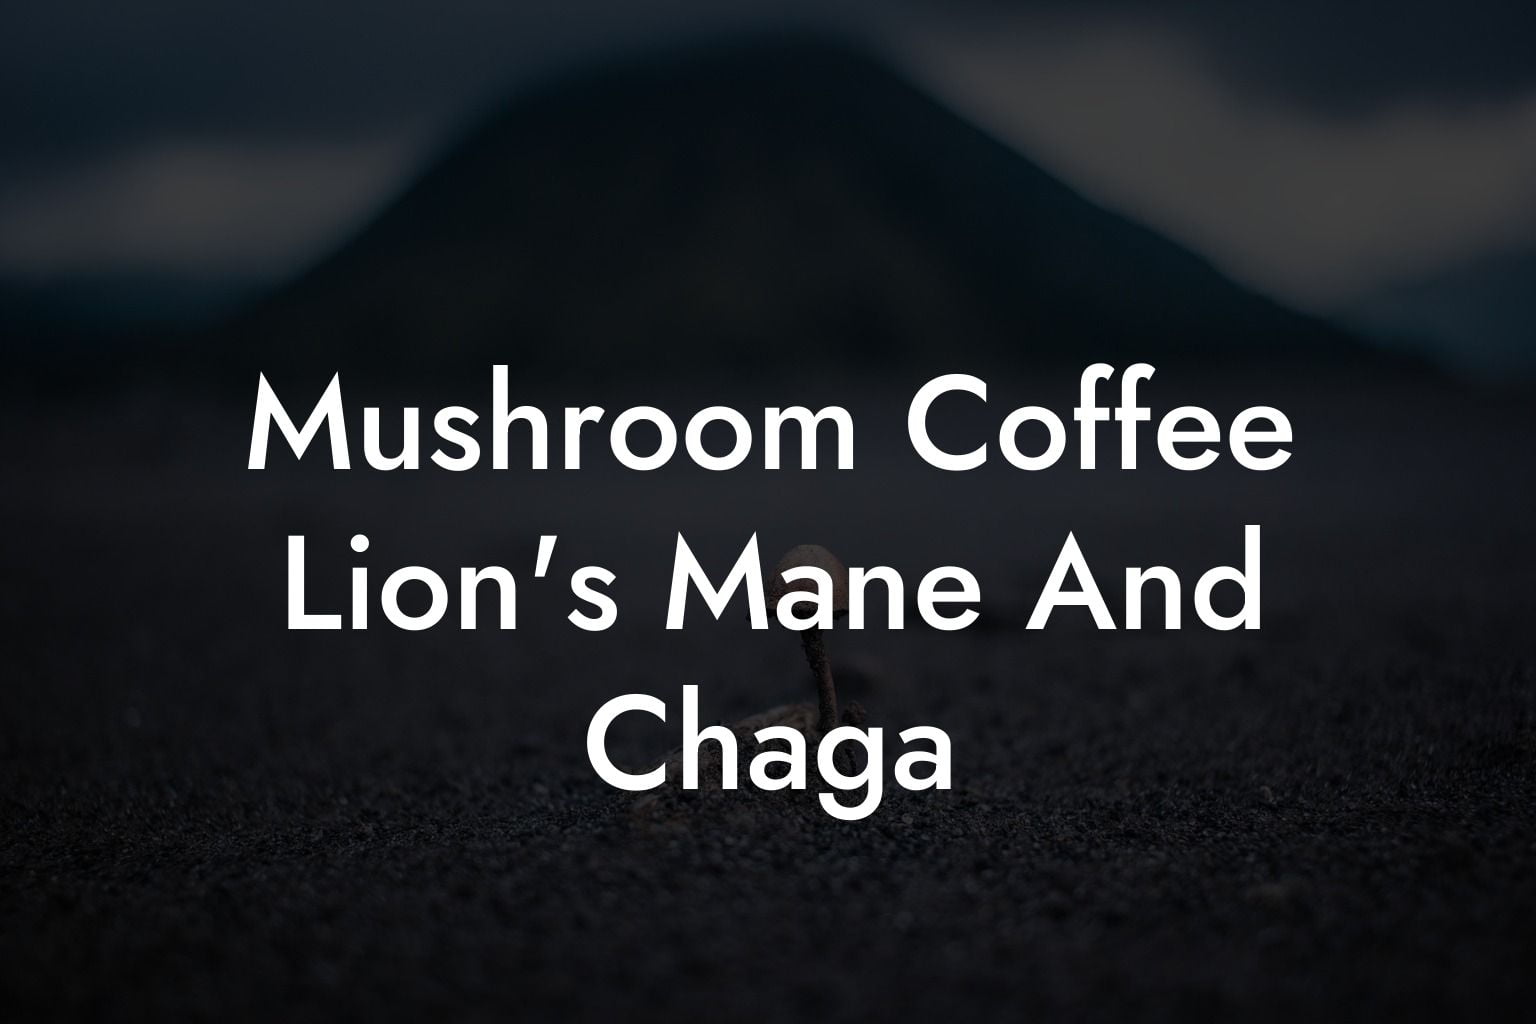 Mushroom Coffee Lion's Mane And Chaga